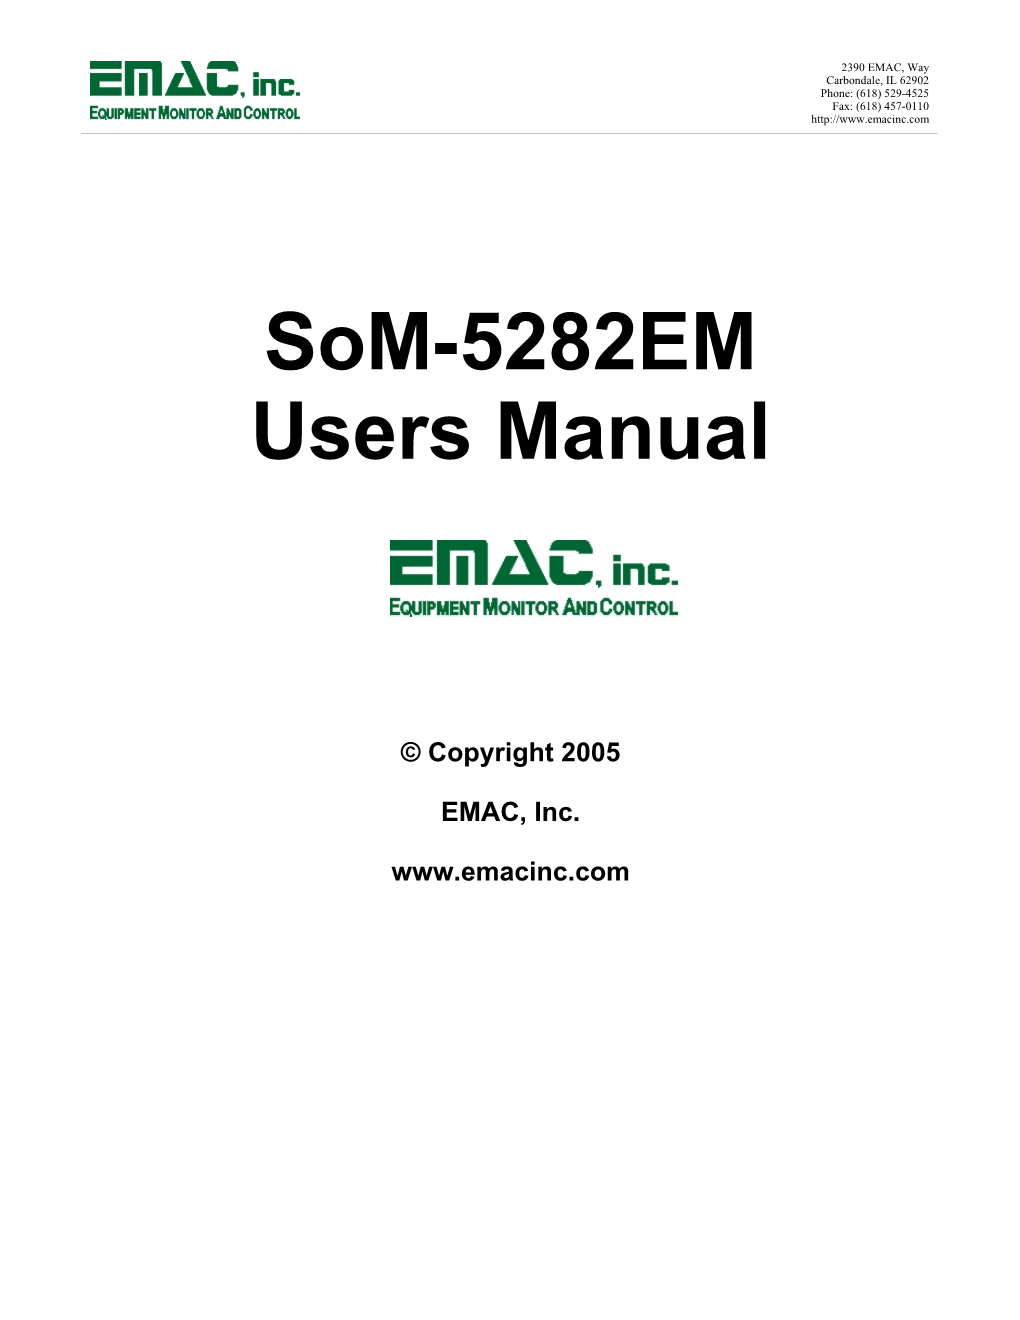 Som-5282EM Users Manual